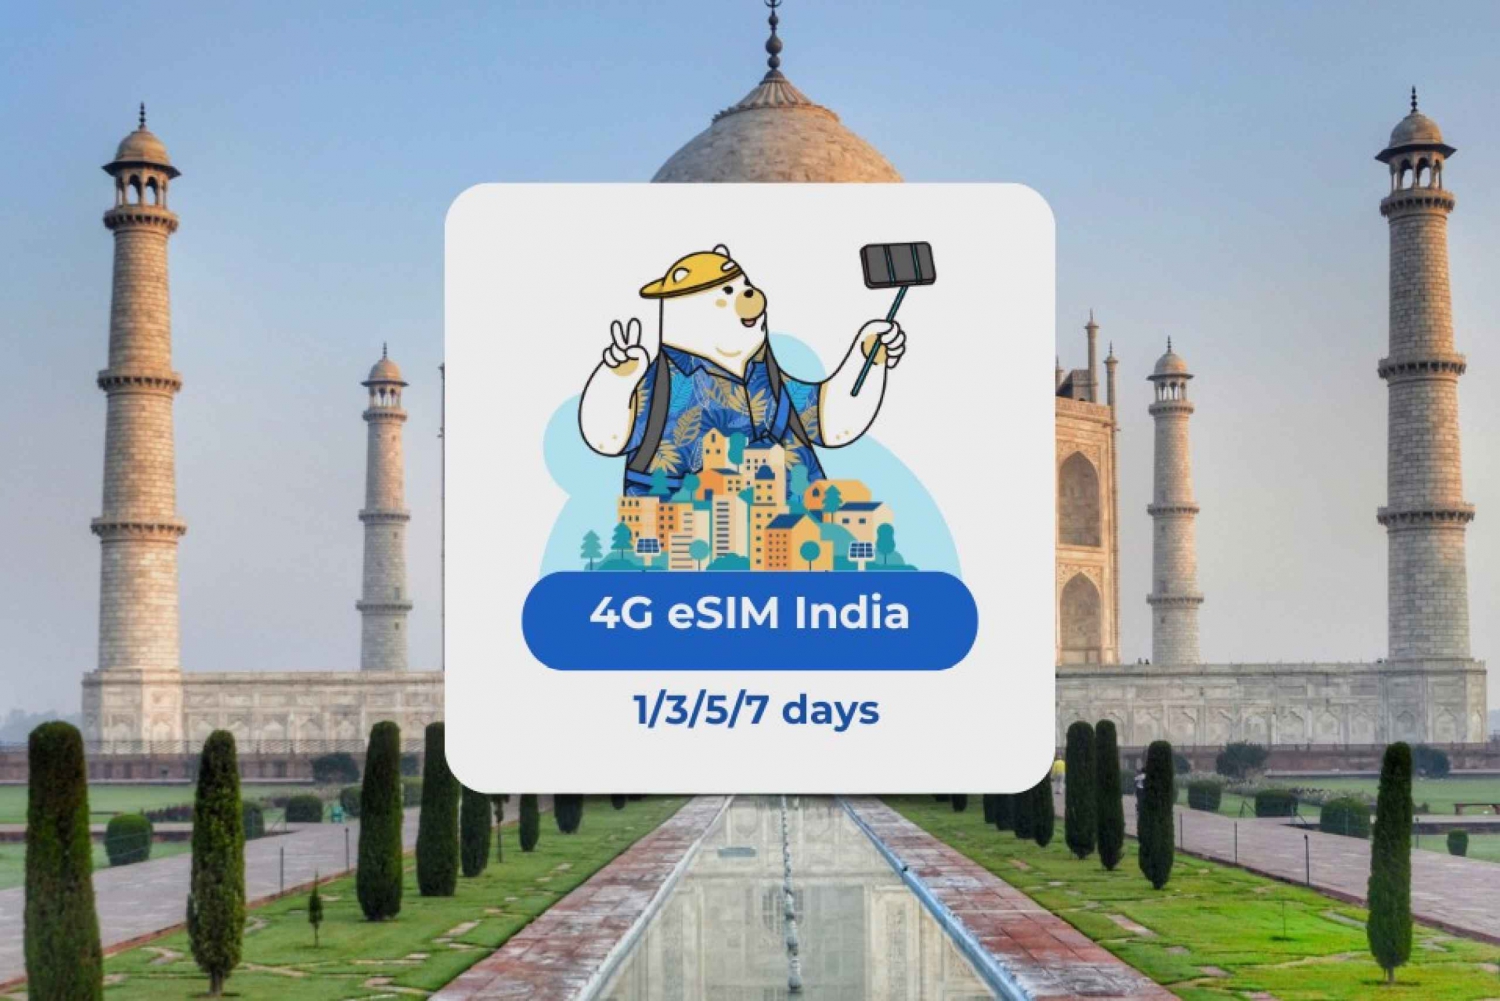 India: eSIM Mobile Data Plan - 1/3/5/7 days